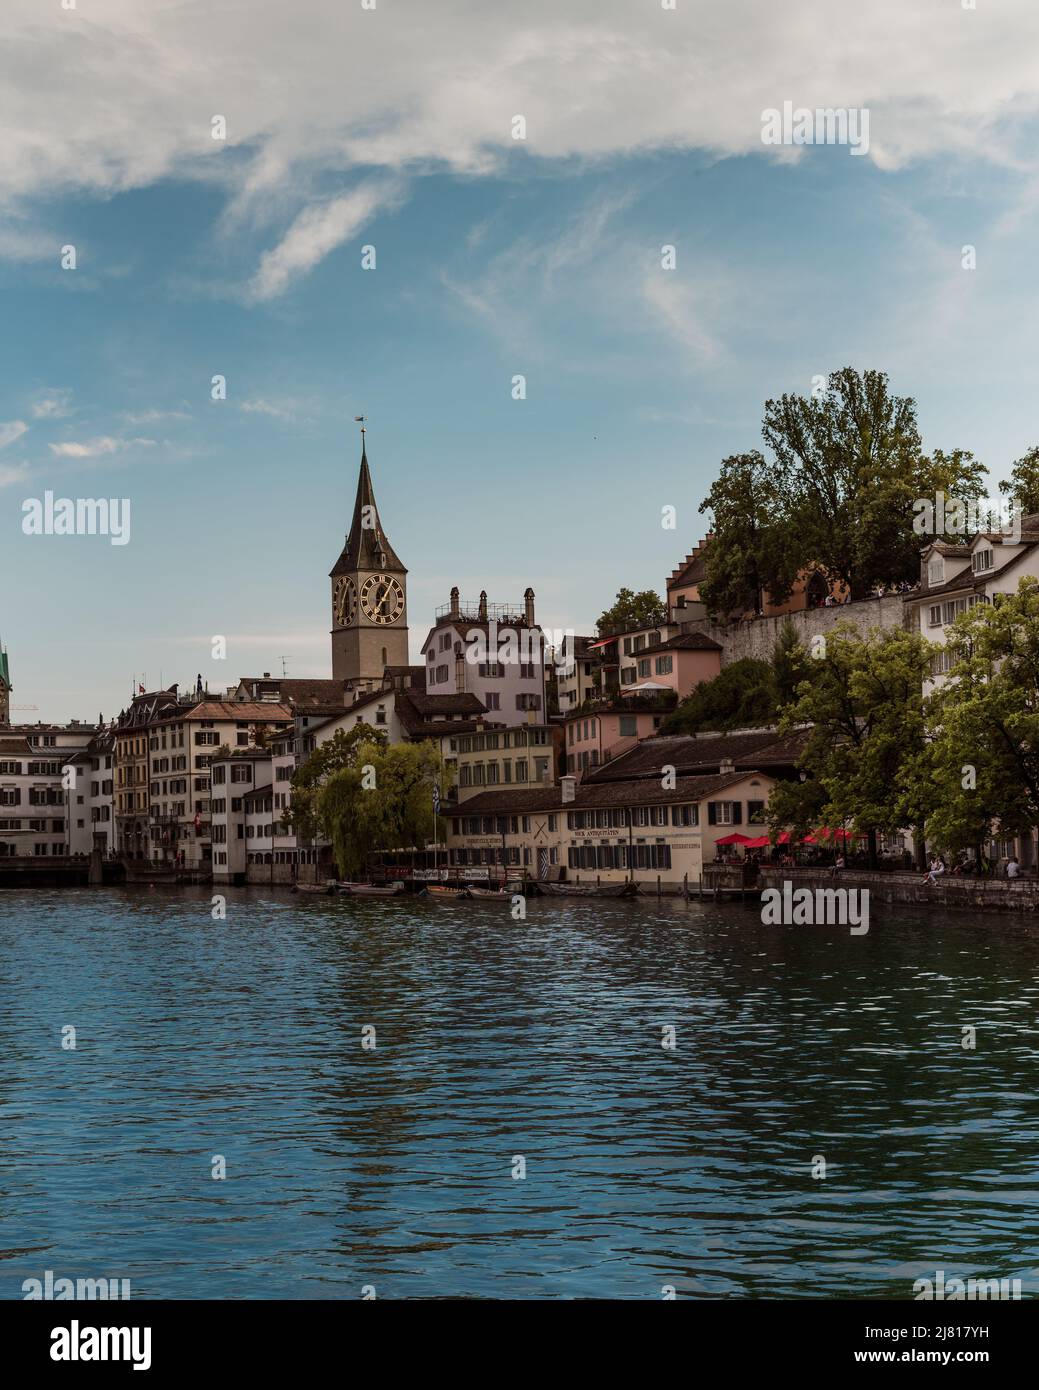 Zurich Switzerland. 7. July 2018 St. Peter's church clock tower in Zurich viewed from the river Limmat Stock Photo